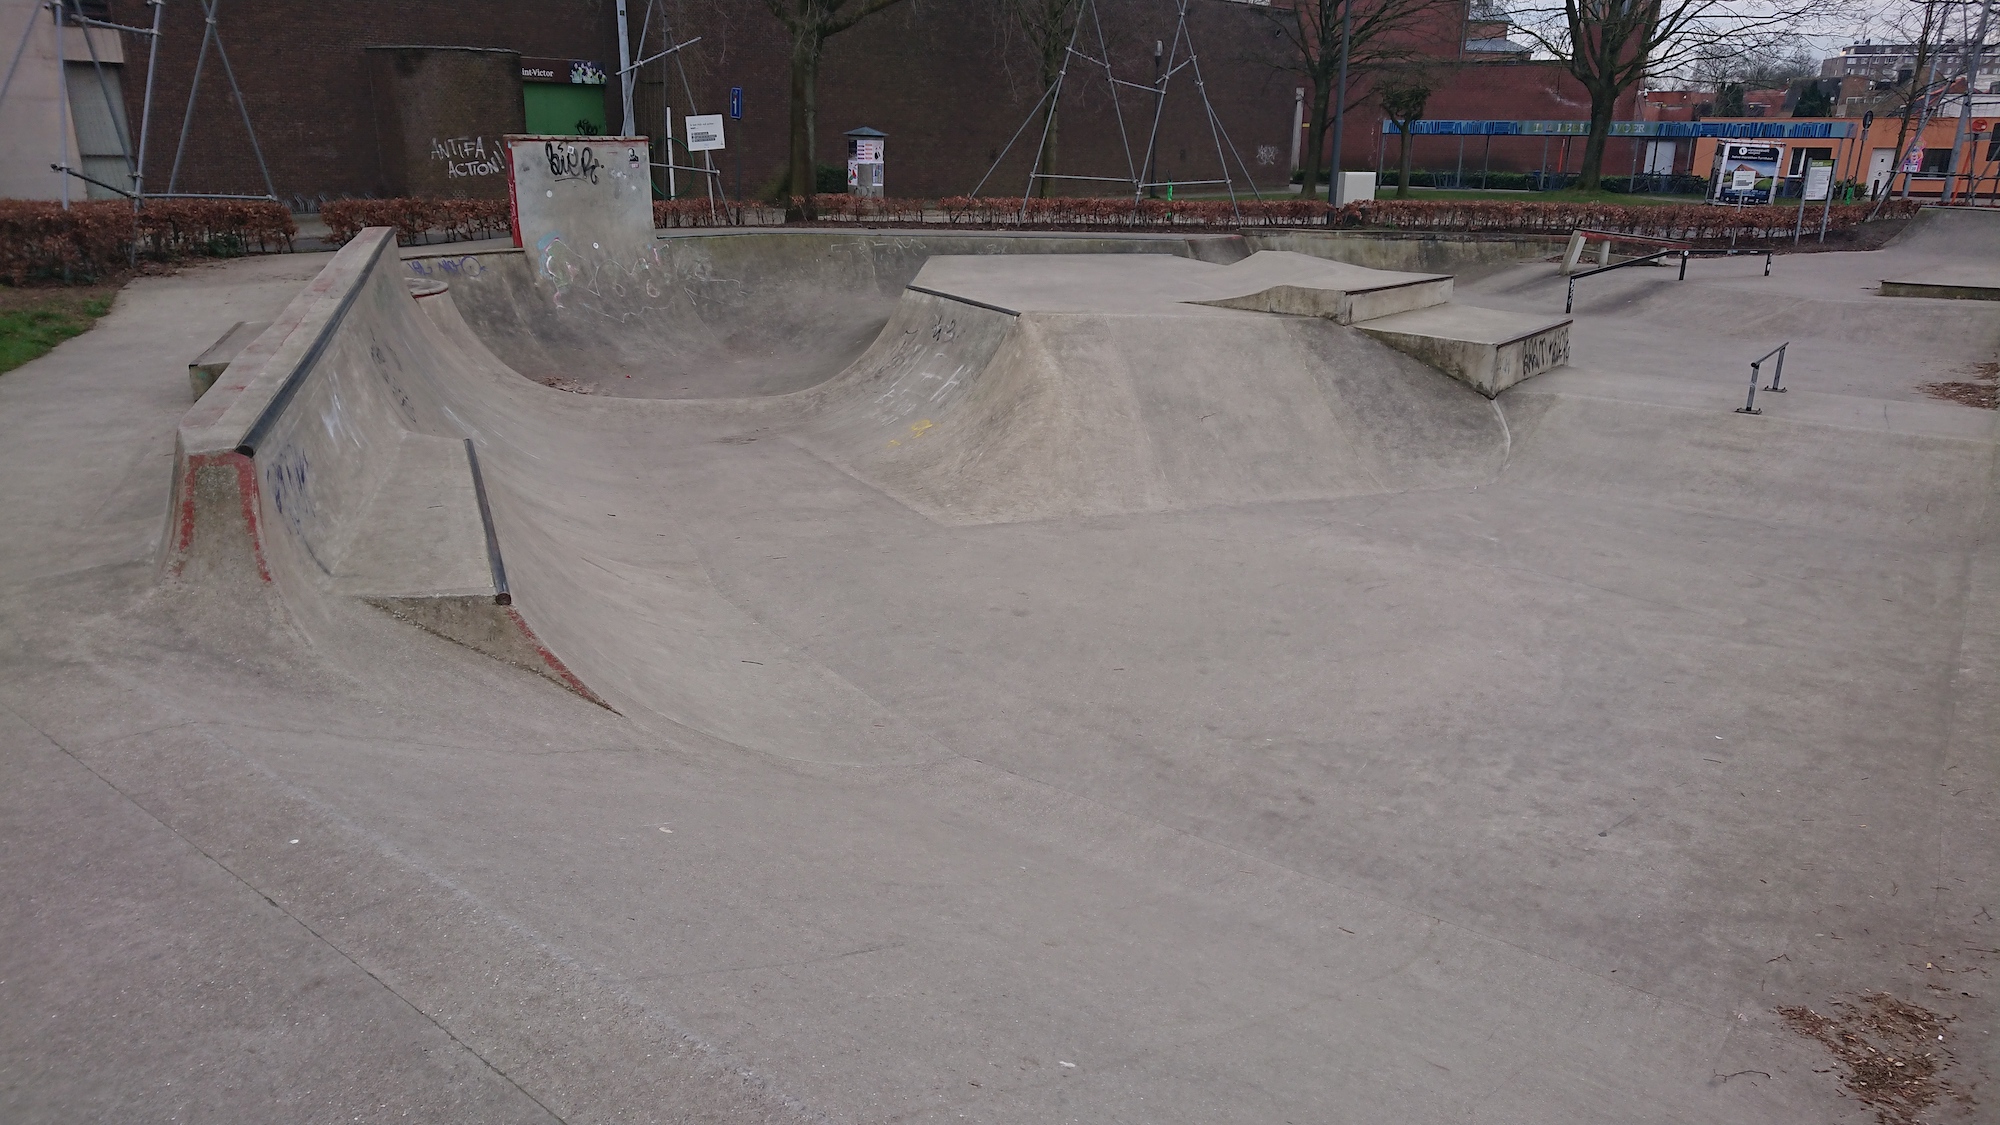 Turnhout Jailyard skatepark